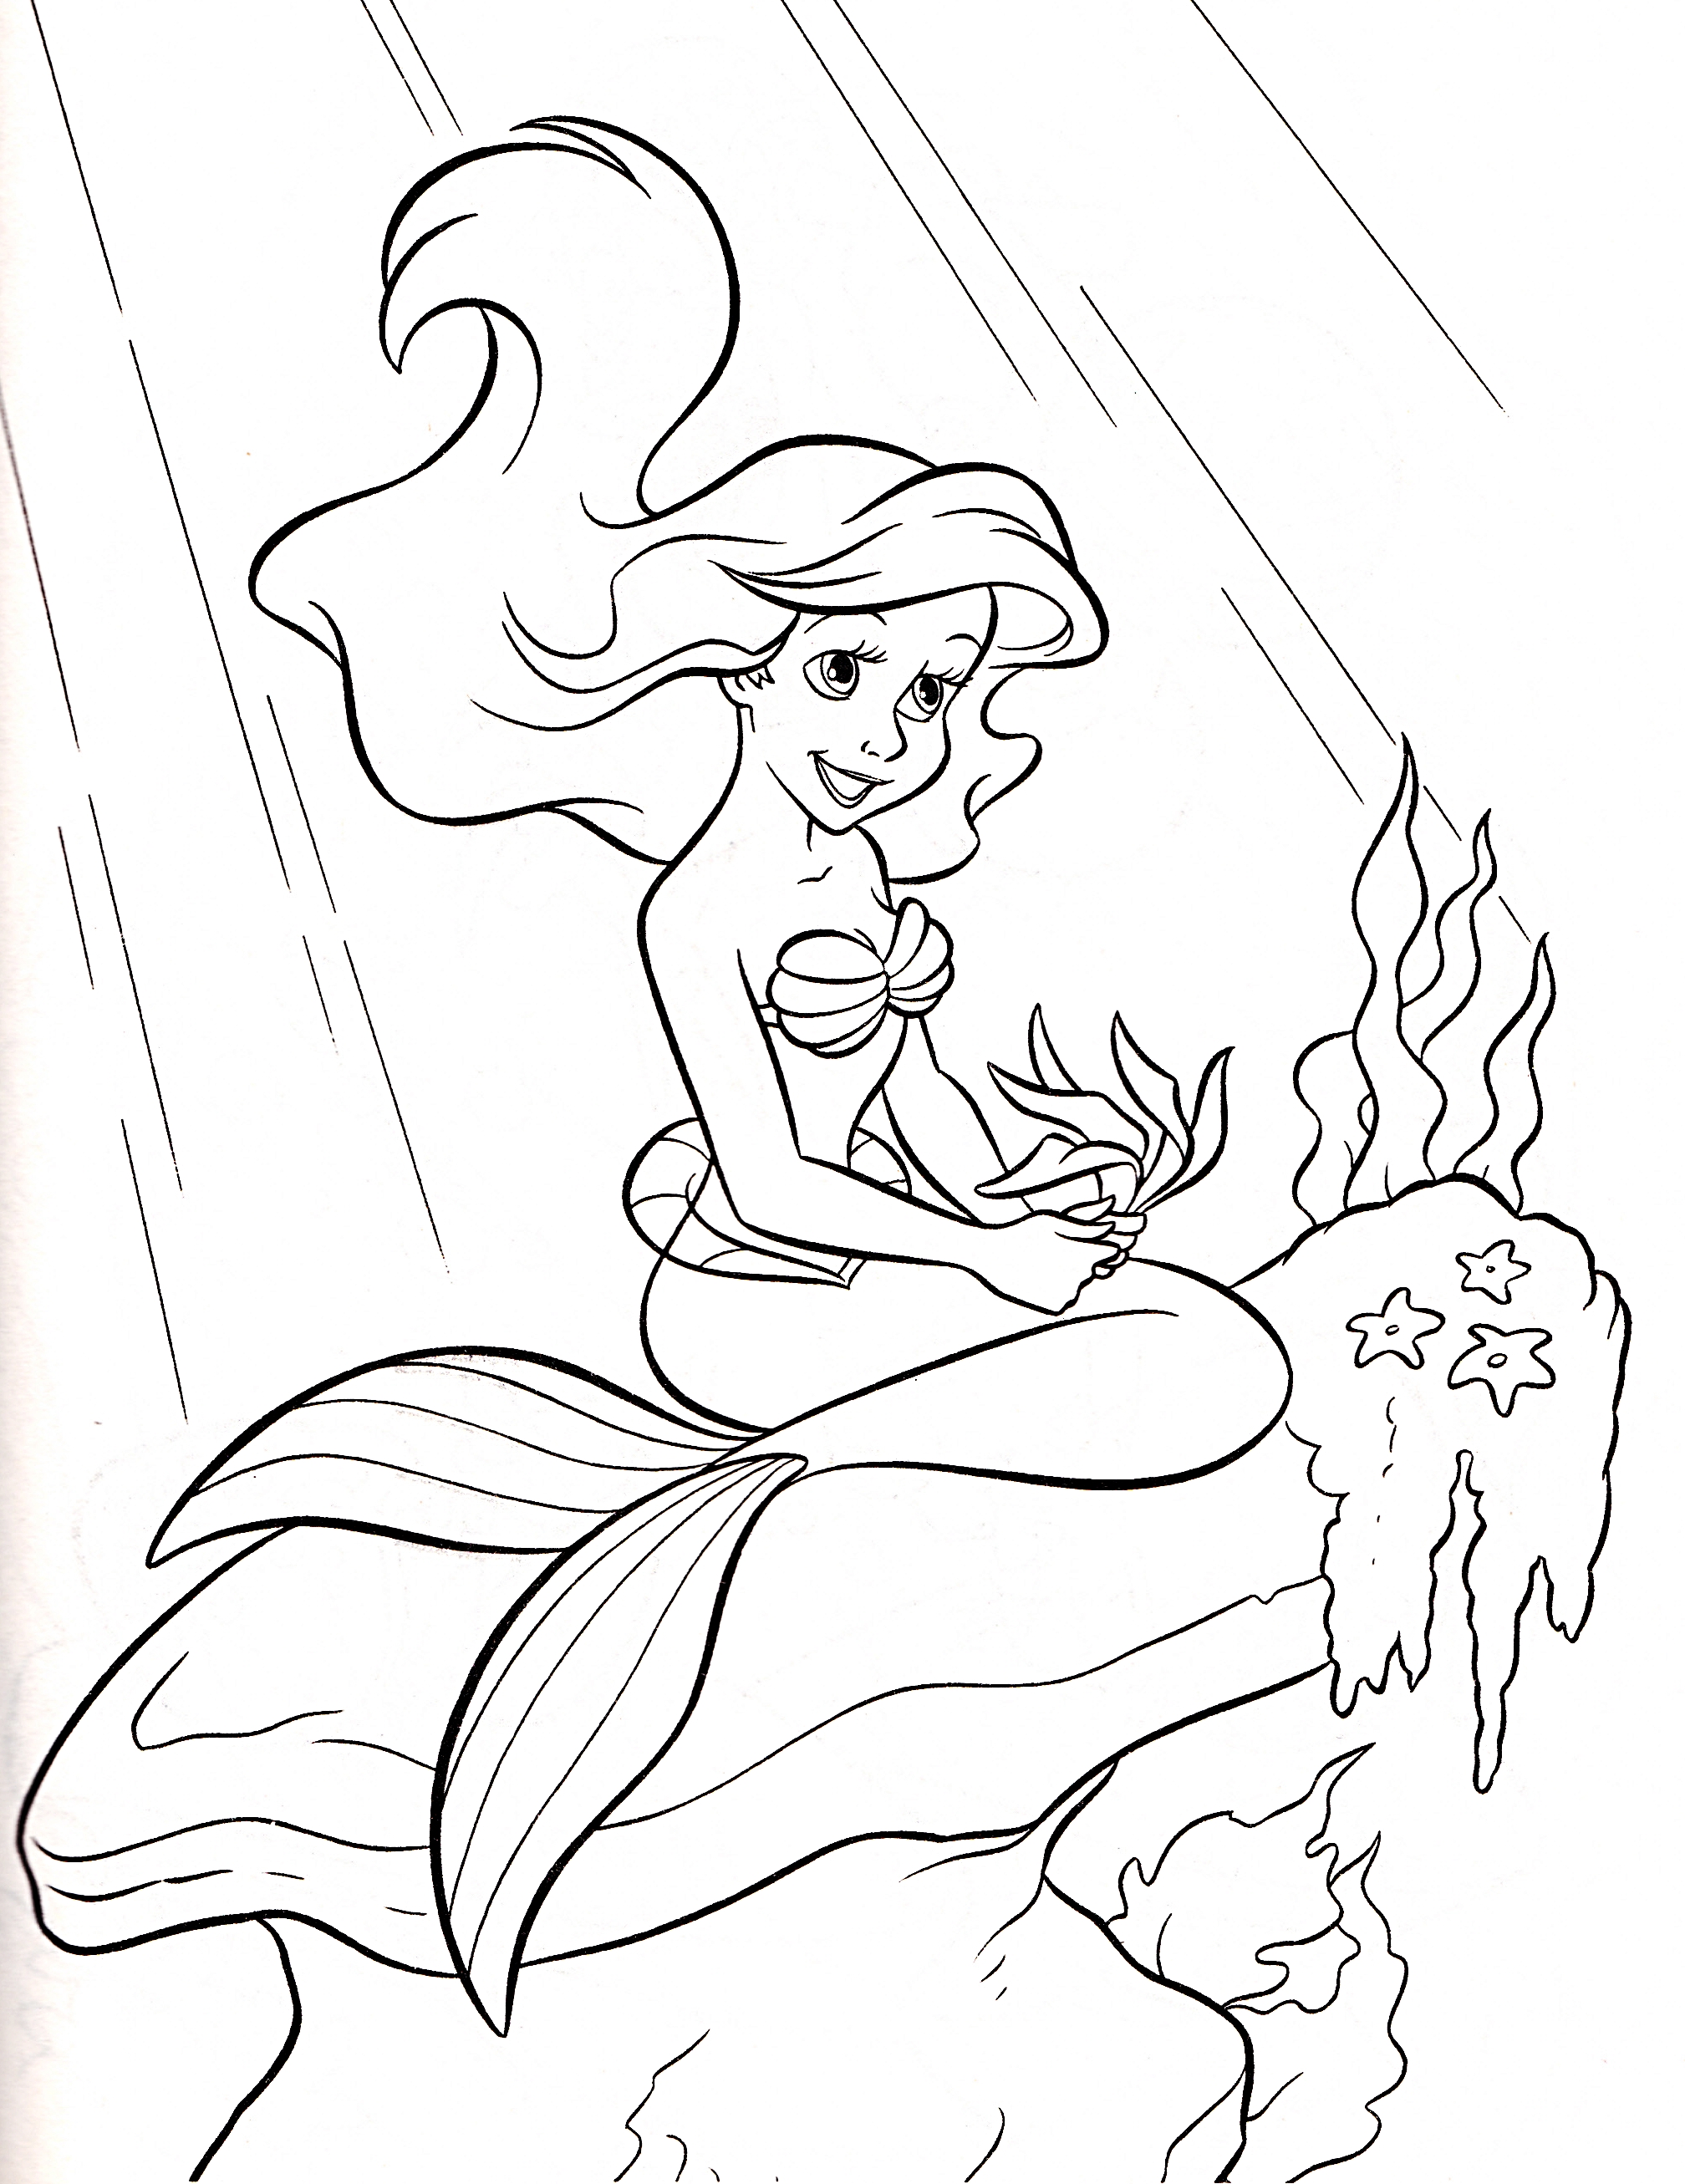  Disney coloring pages | Cute Princess Ariel